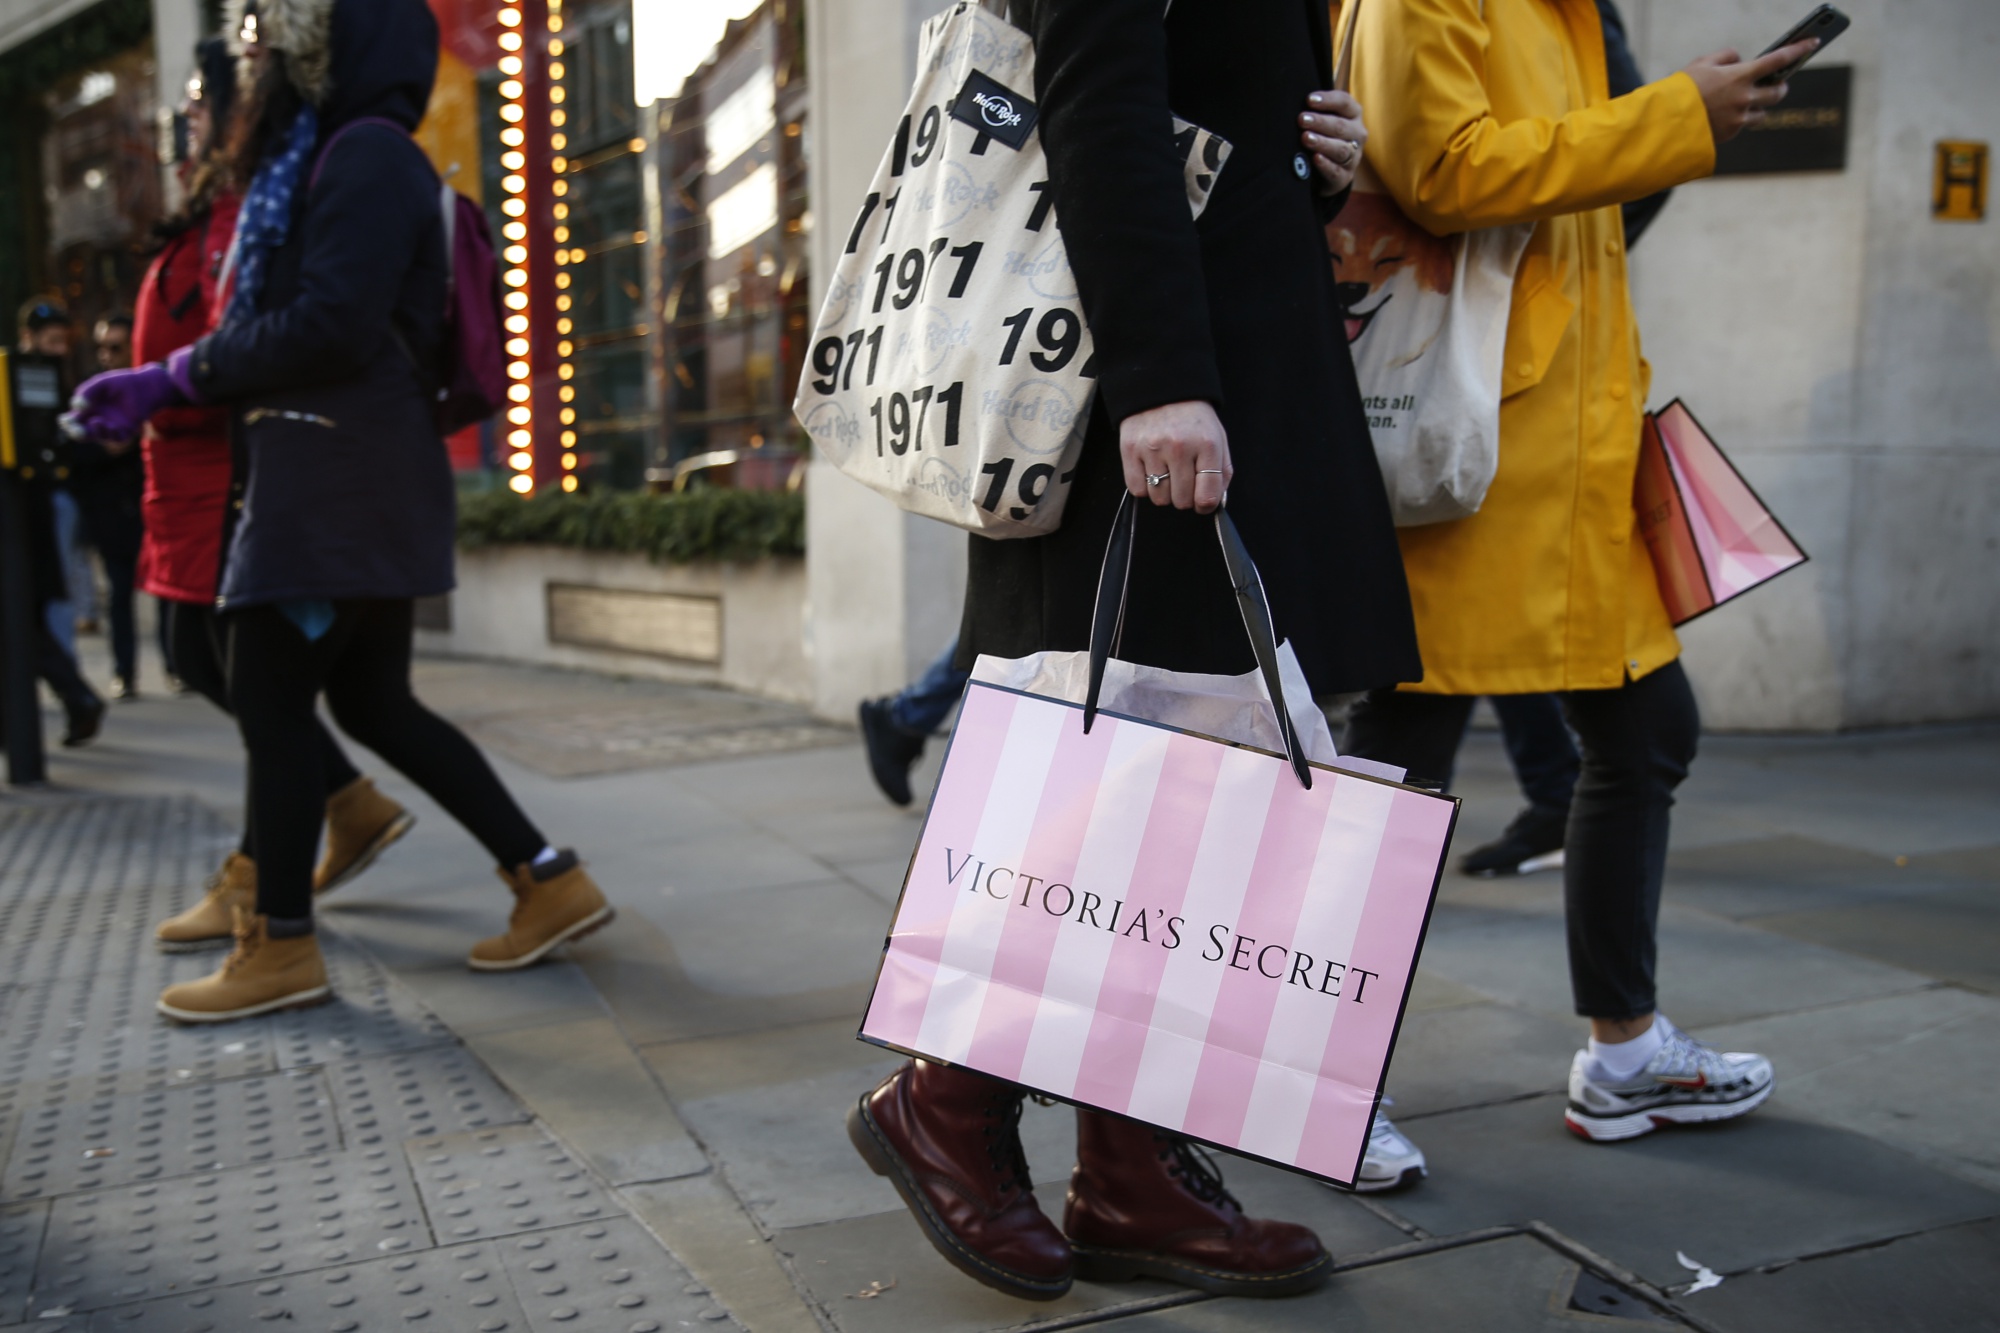 Victoria's Secret (VSCO) Stock Falls as Earnings Show Sales Fall - Bloomberg